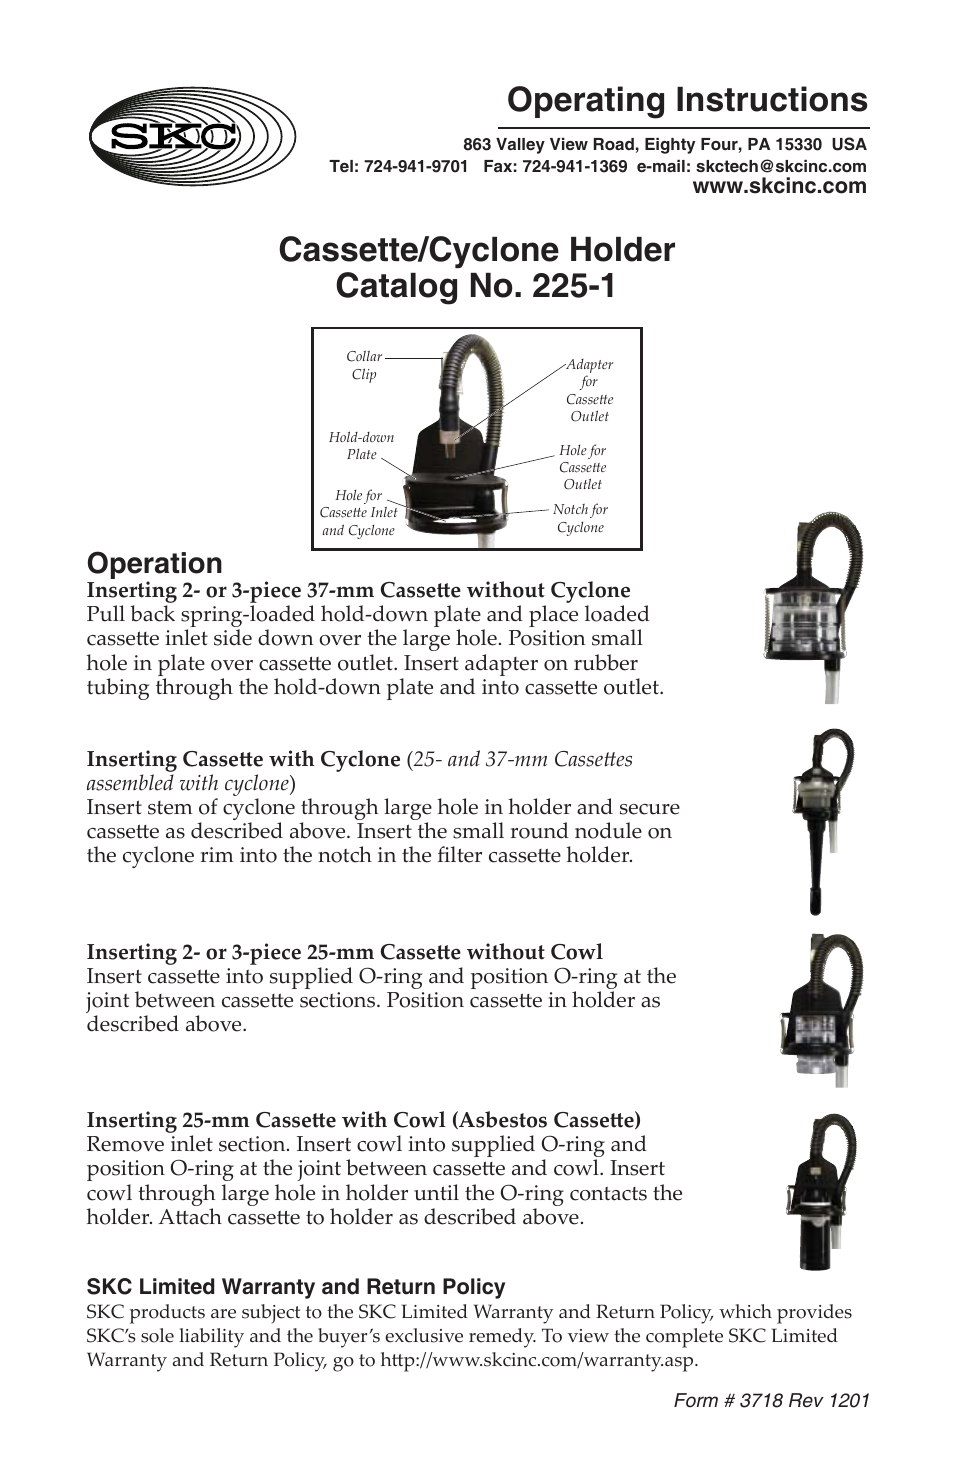 225-1 Cassette_Cyclone Holder